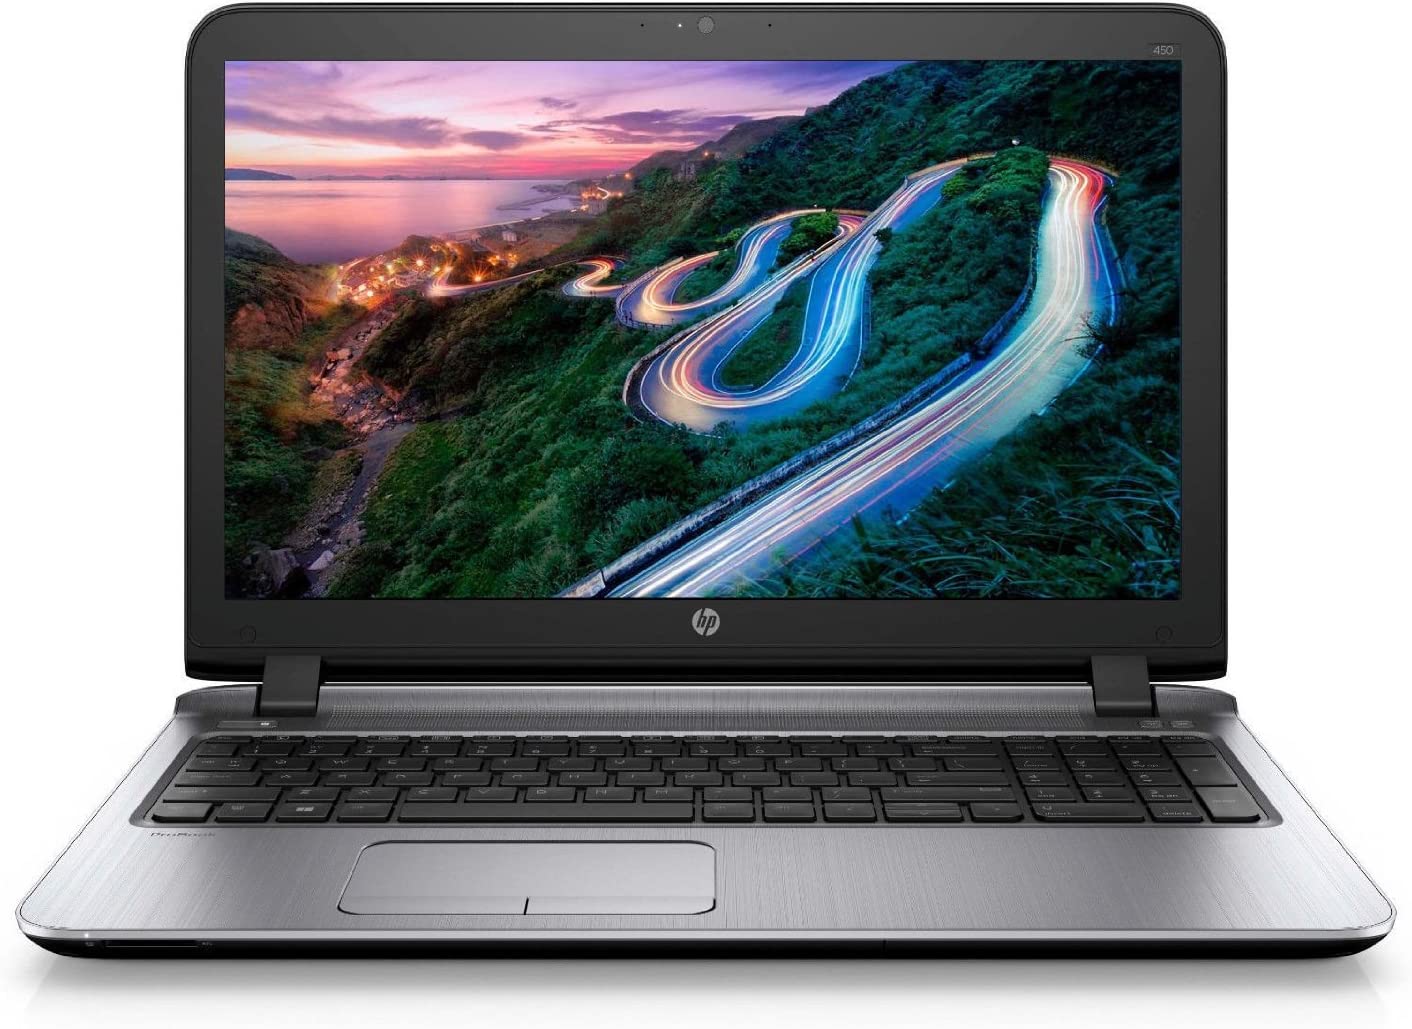 HP Probook 450 G1 Core i5-4200M 2.50 GHZ , 17.3 inches hd display windows 10 Pro (Renewed)